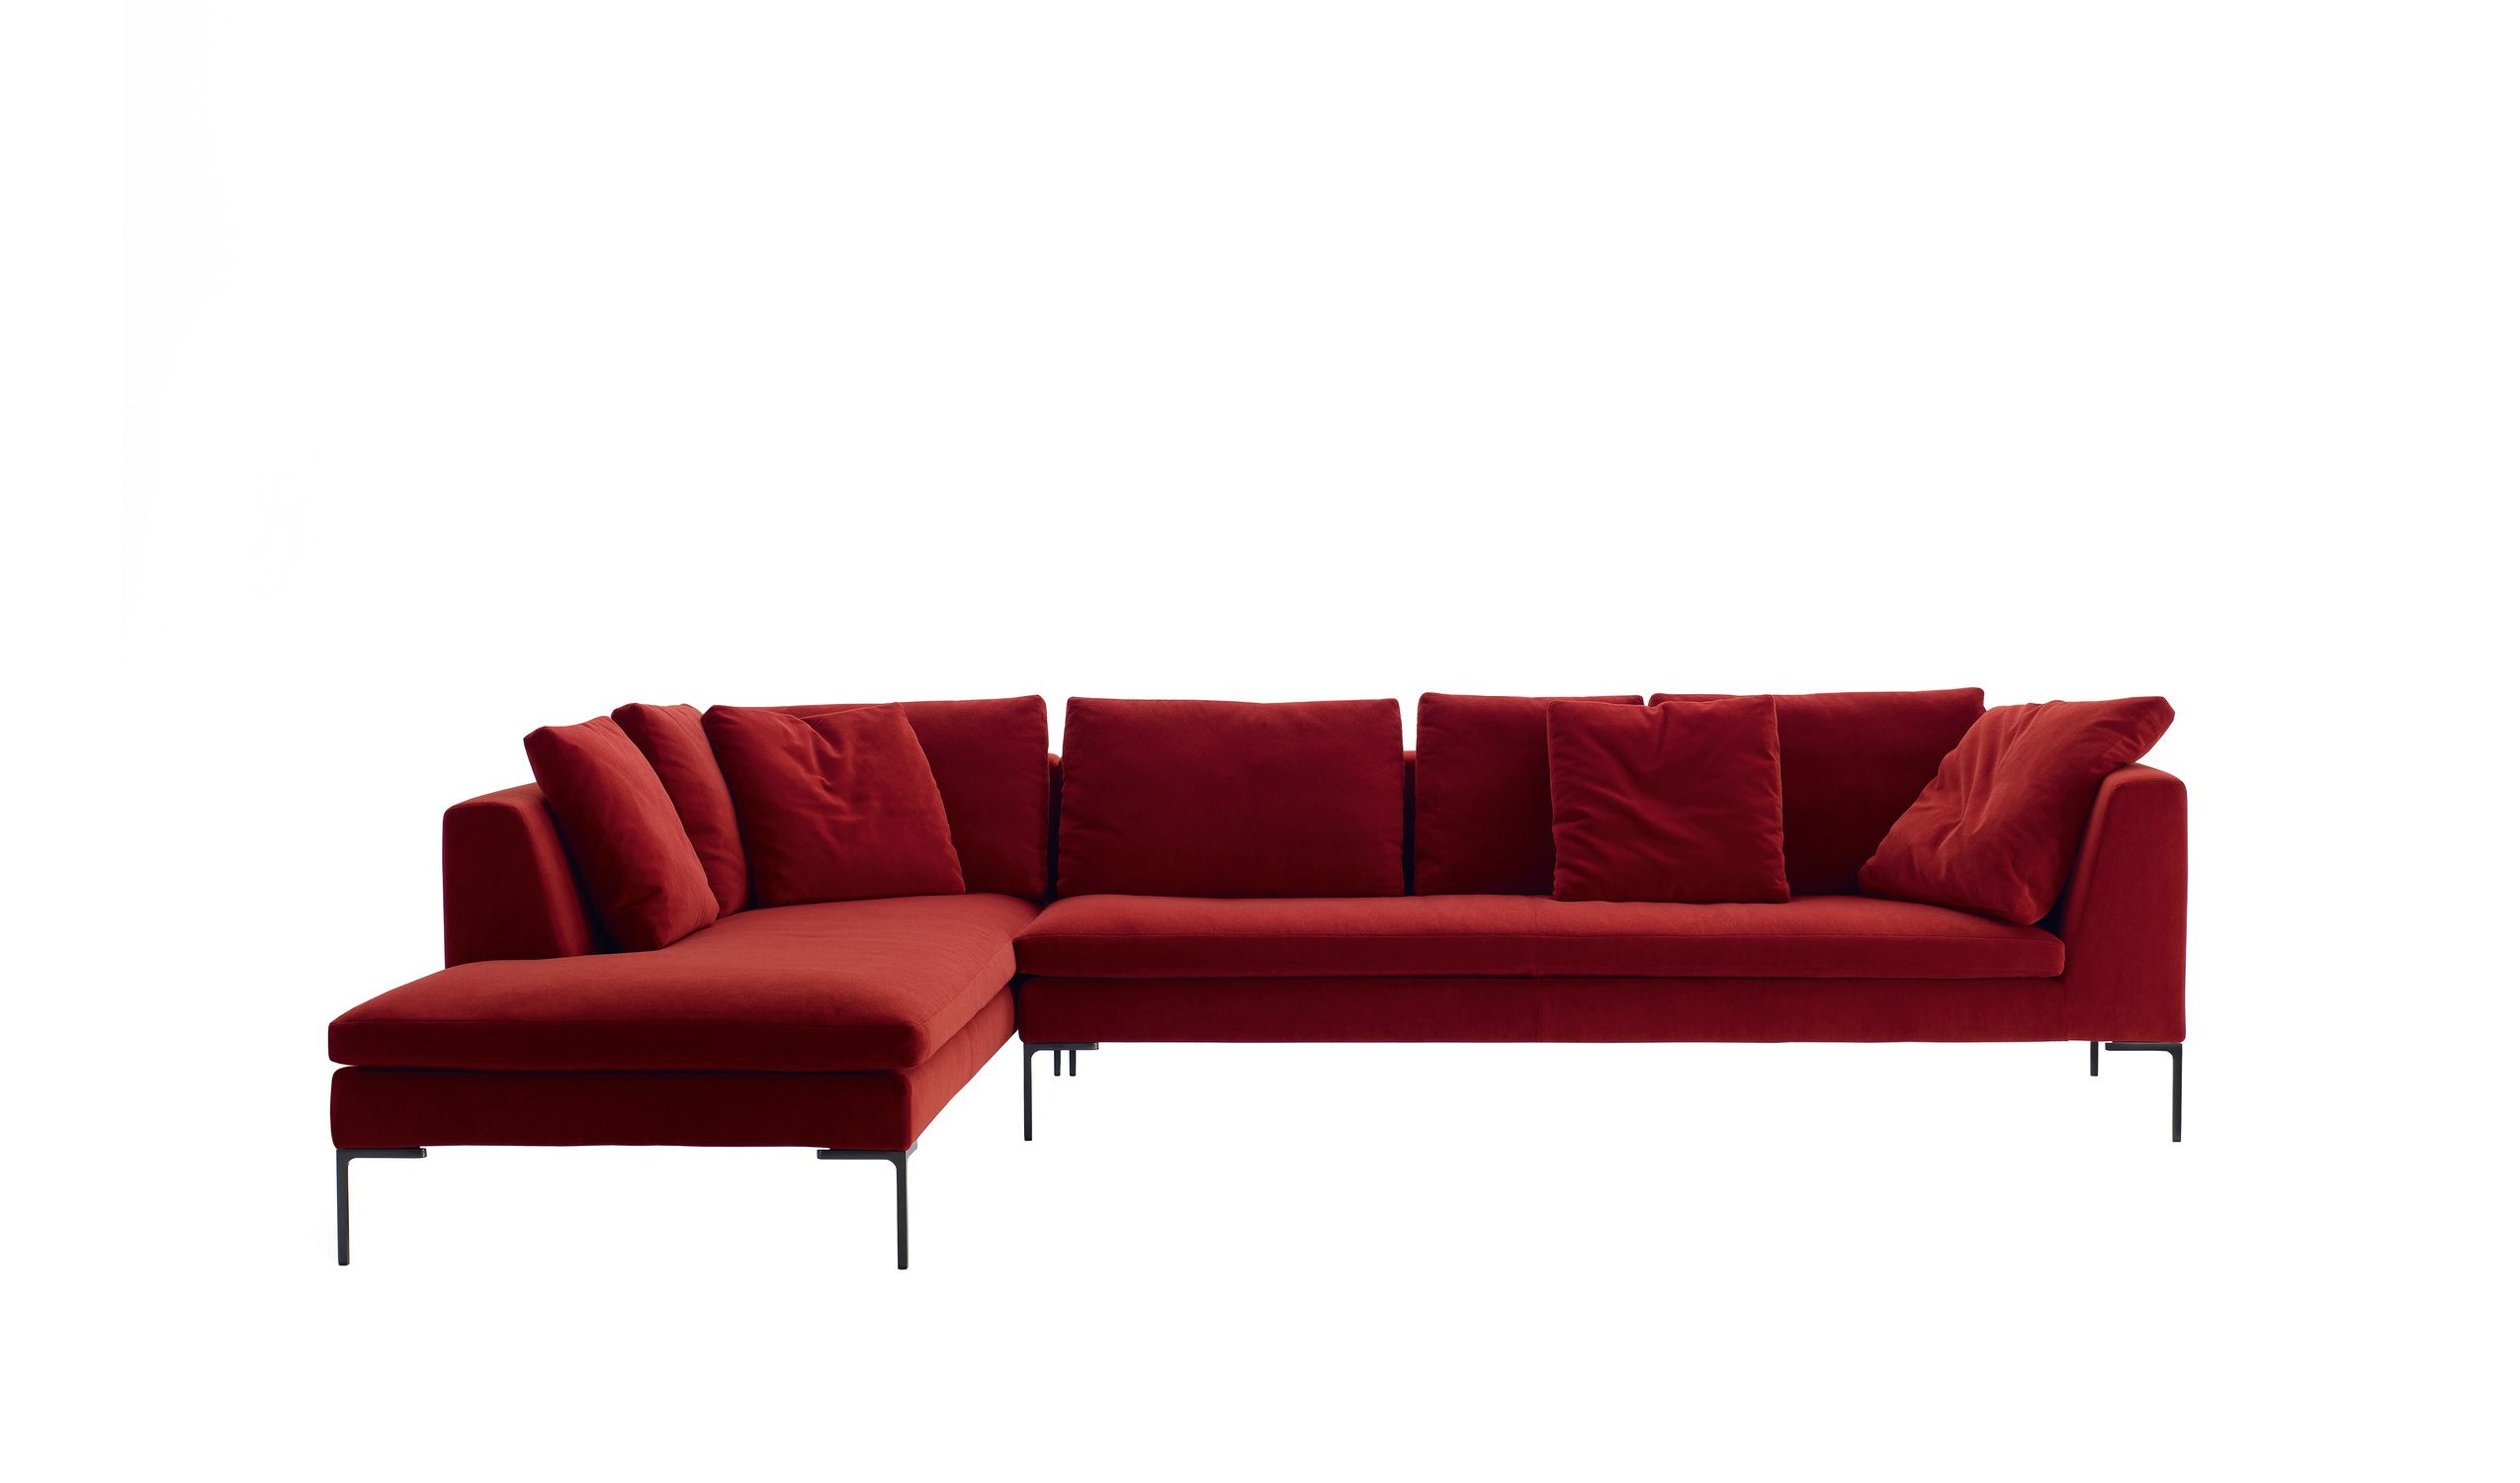 classic italian living room furniture sets